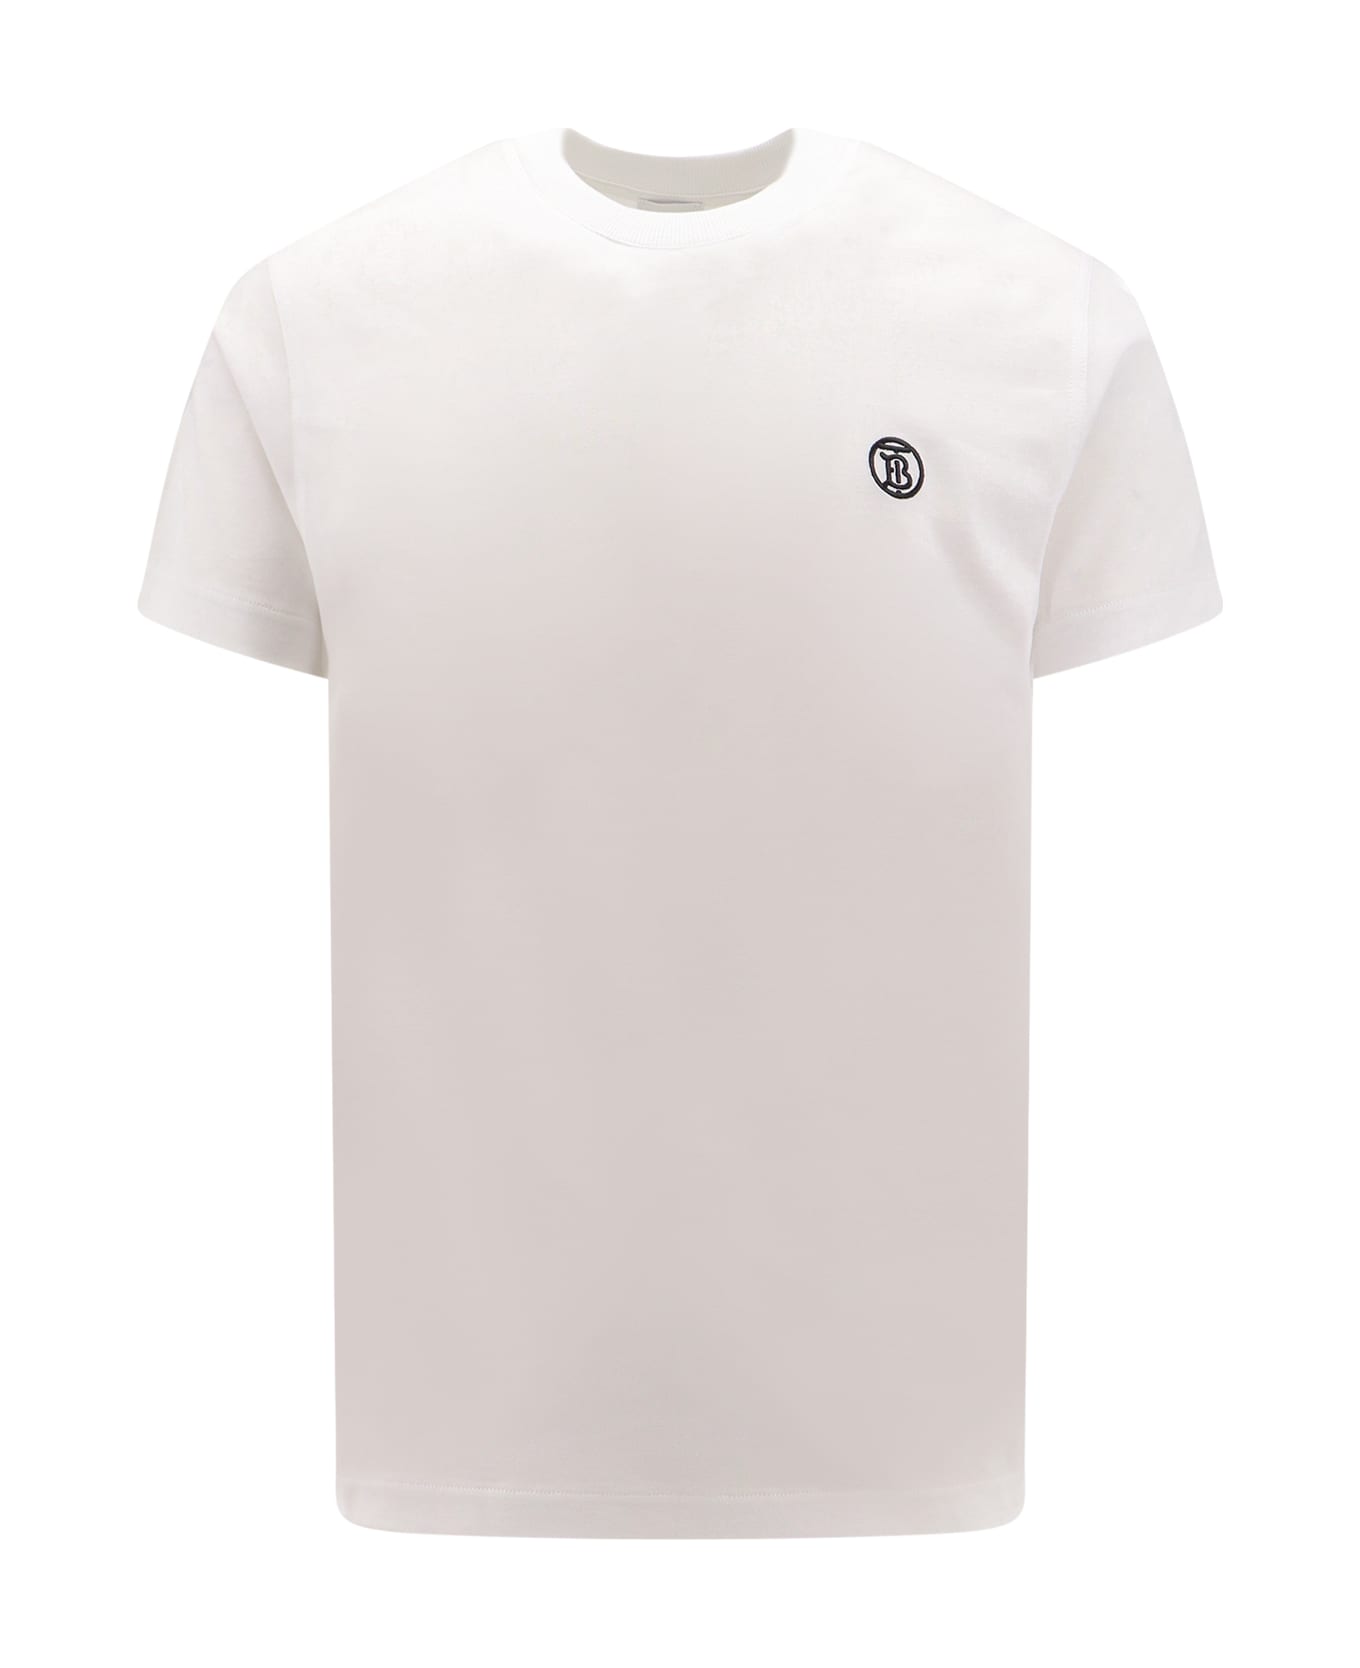 Burberry T-shirt - White